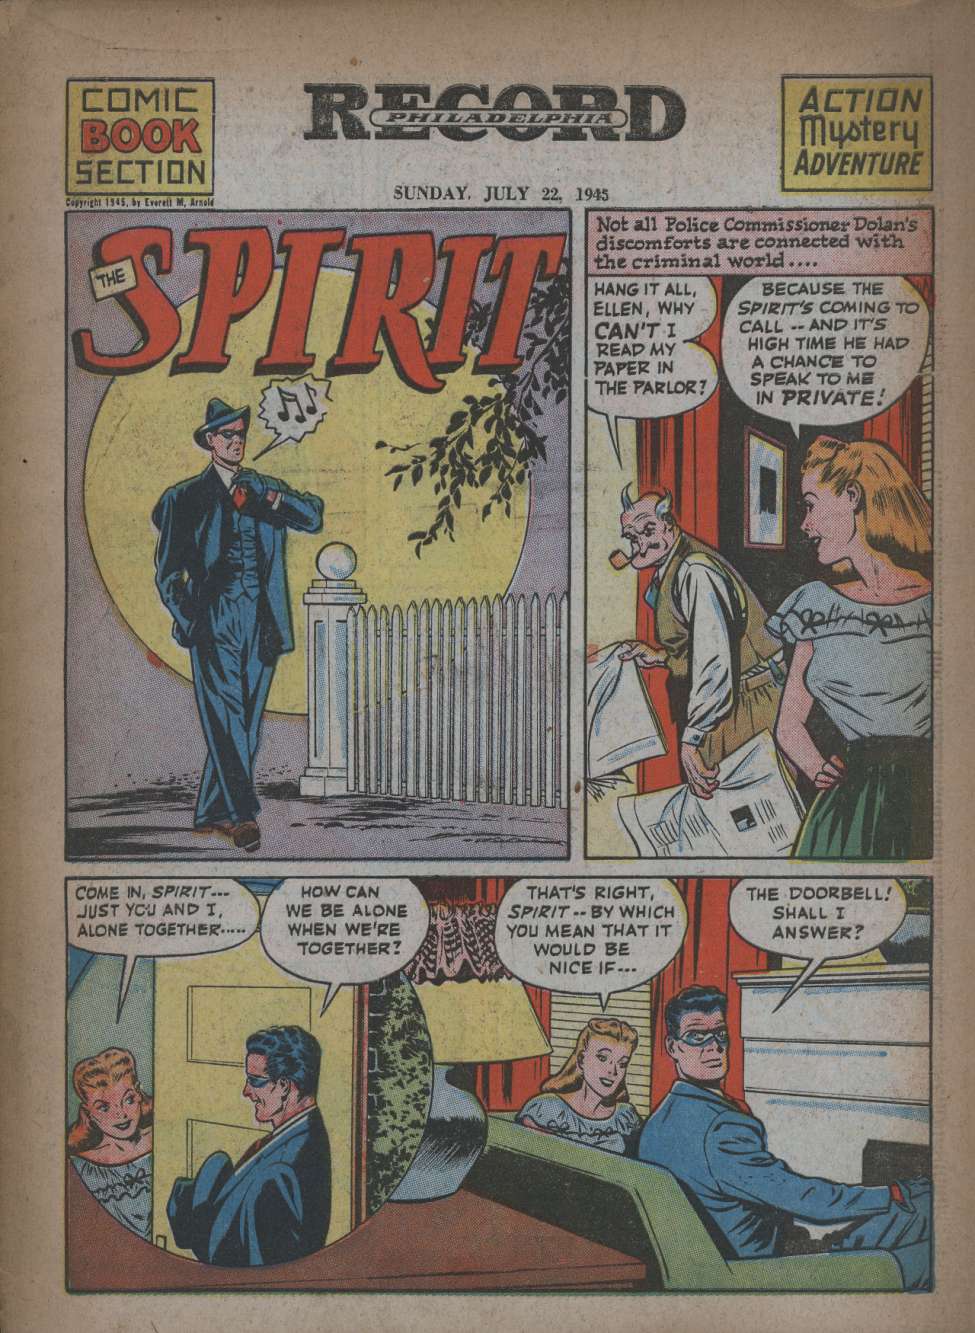 Comic Book Cover For The Spirit (1945-07-22) - Philadelphia Record